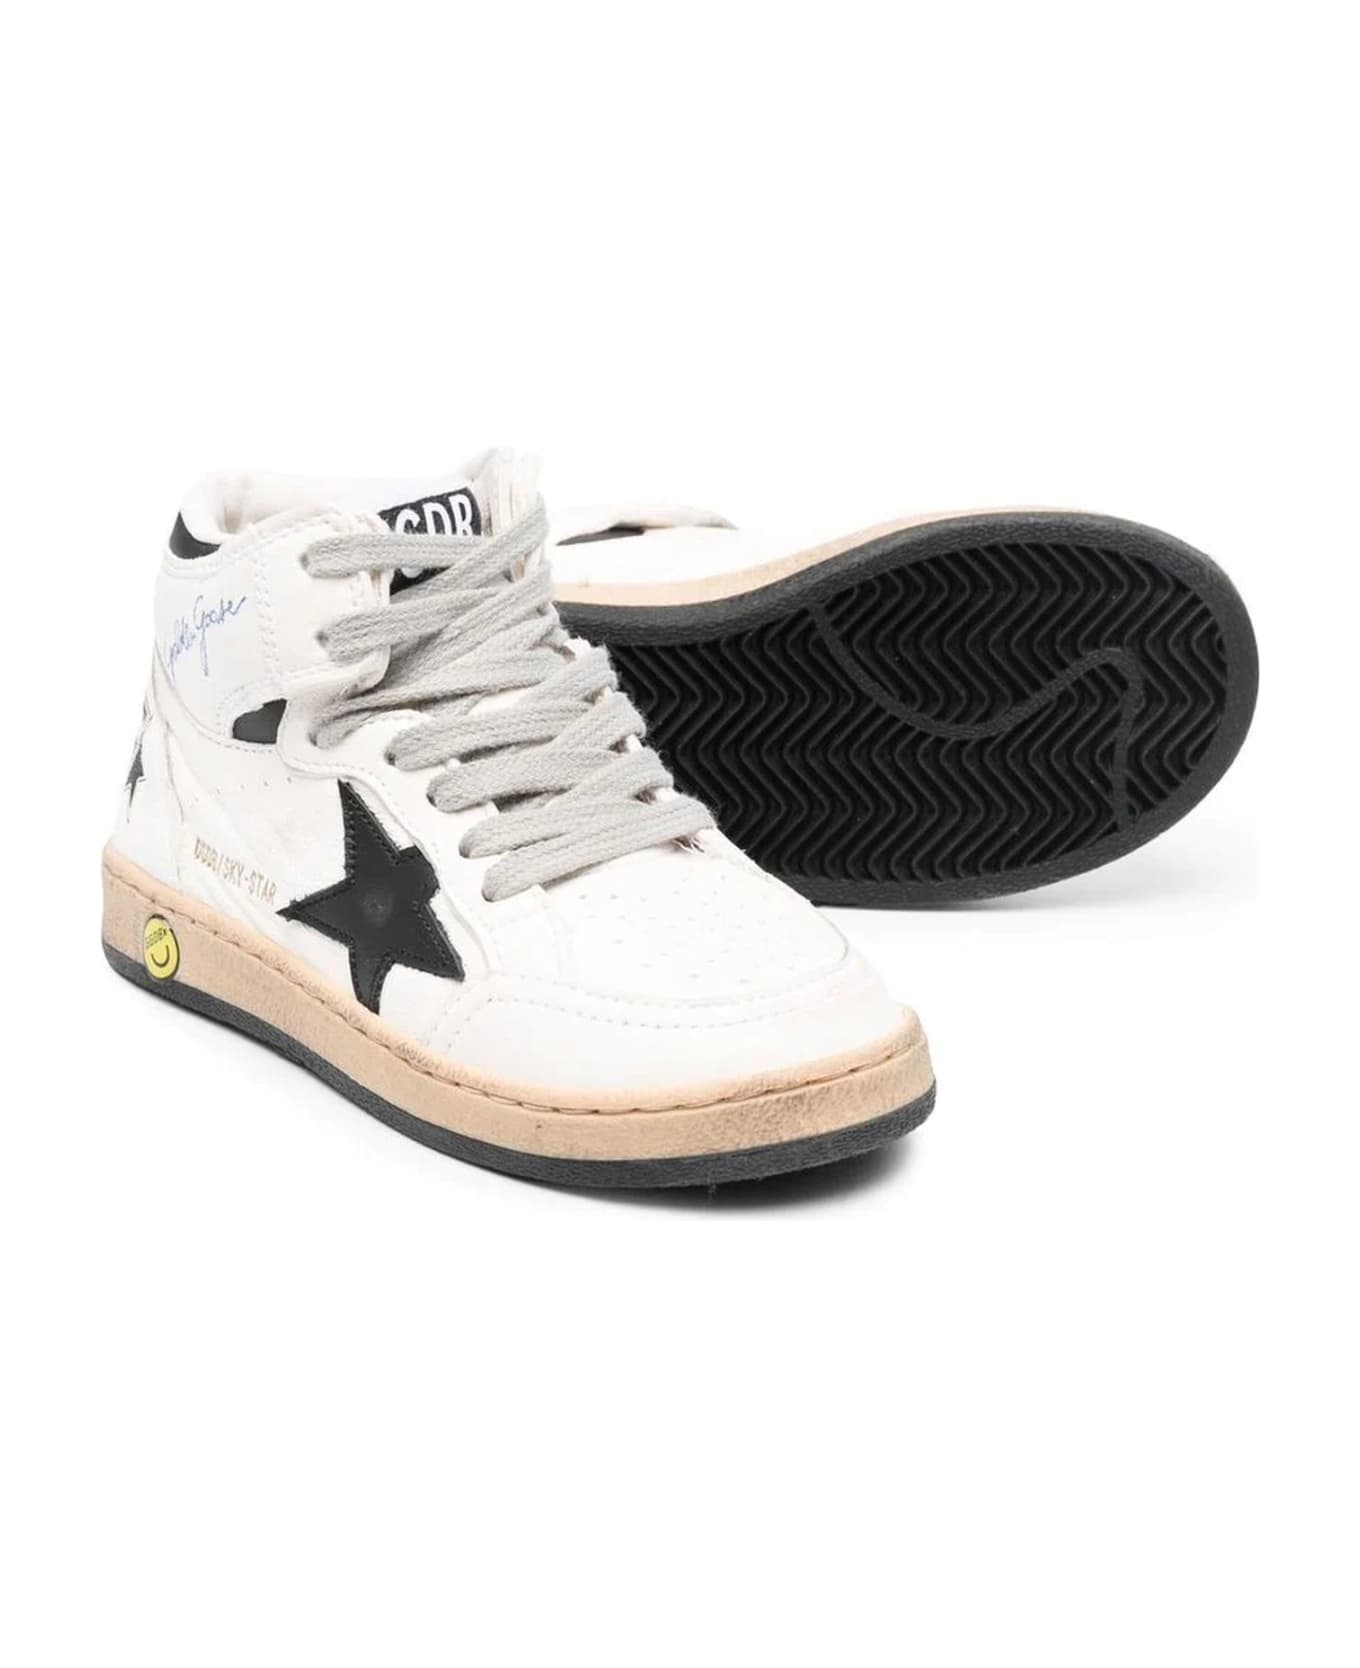 Golden Goose White Calf Leather Sneakers - White/black シューズ